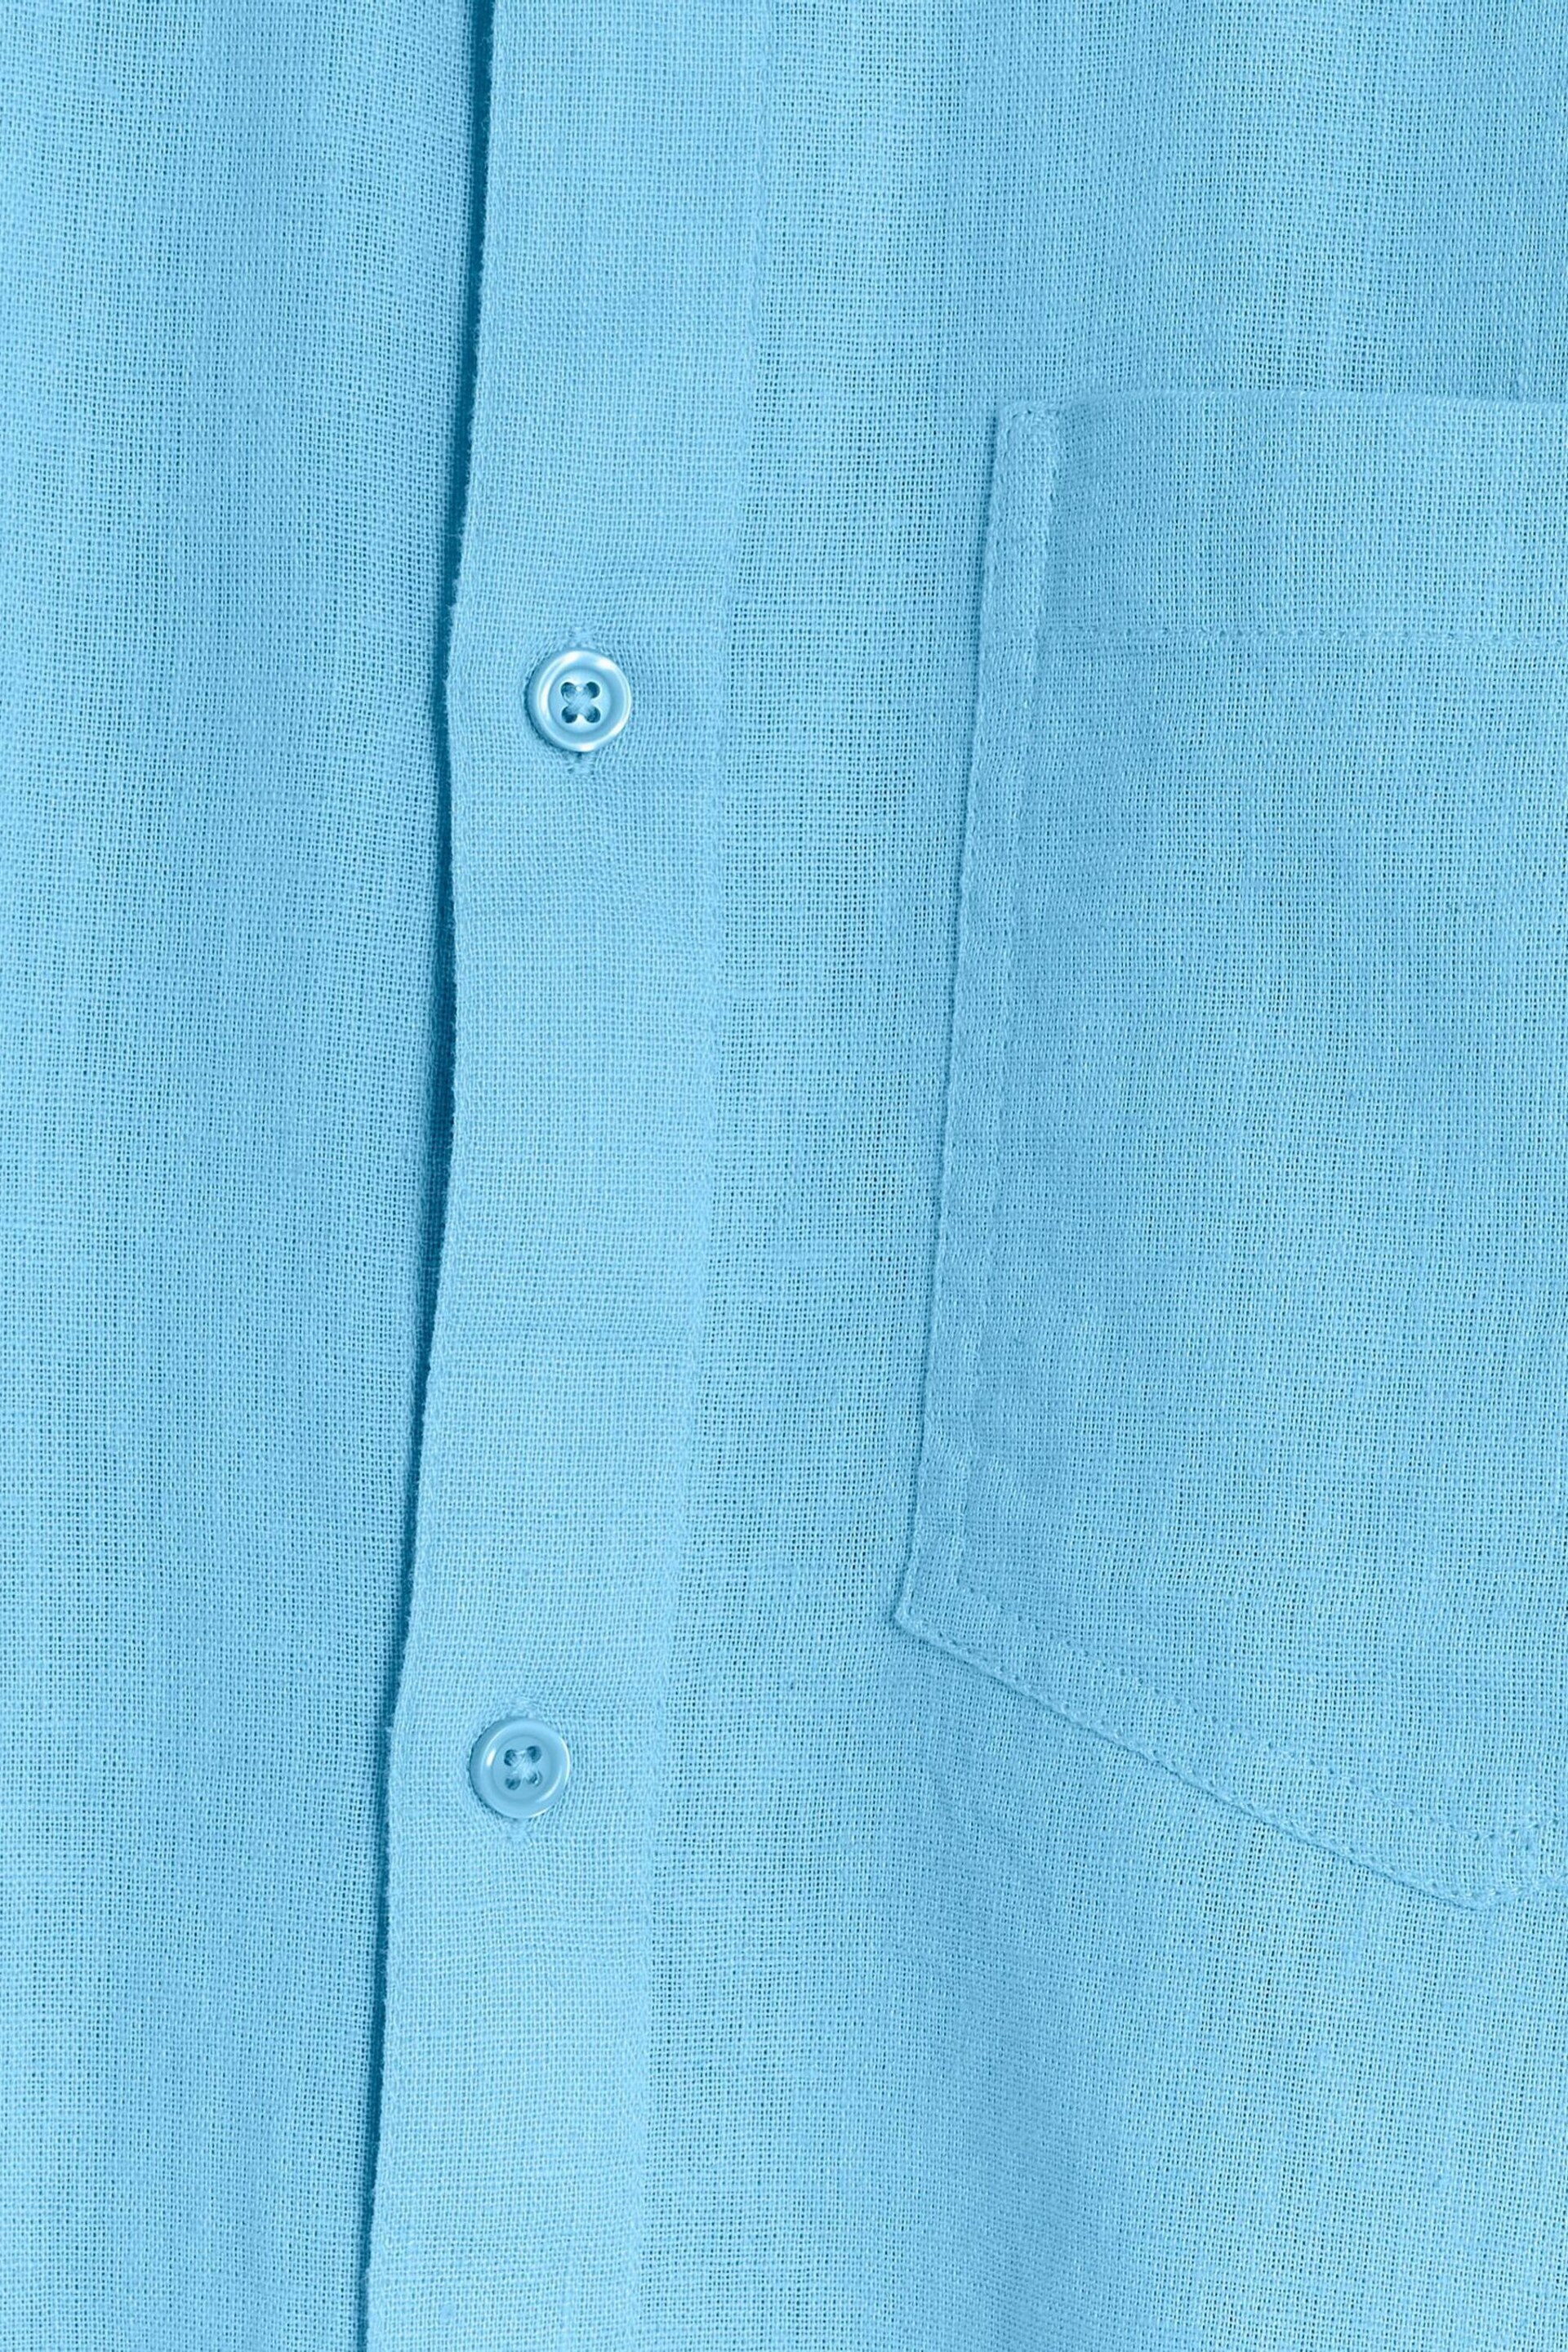 River Island Blue Long Sleeve Linen Shirt - Image 4 of 4